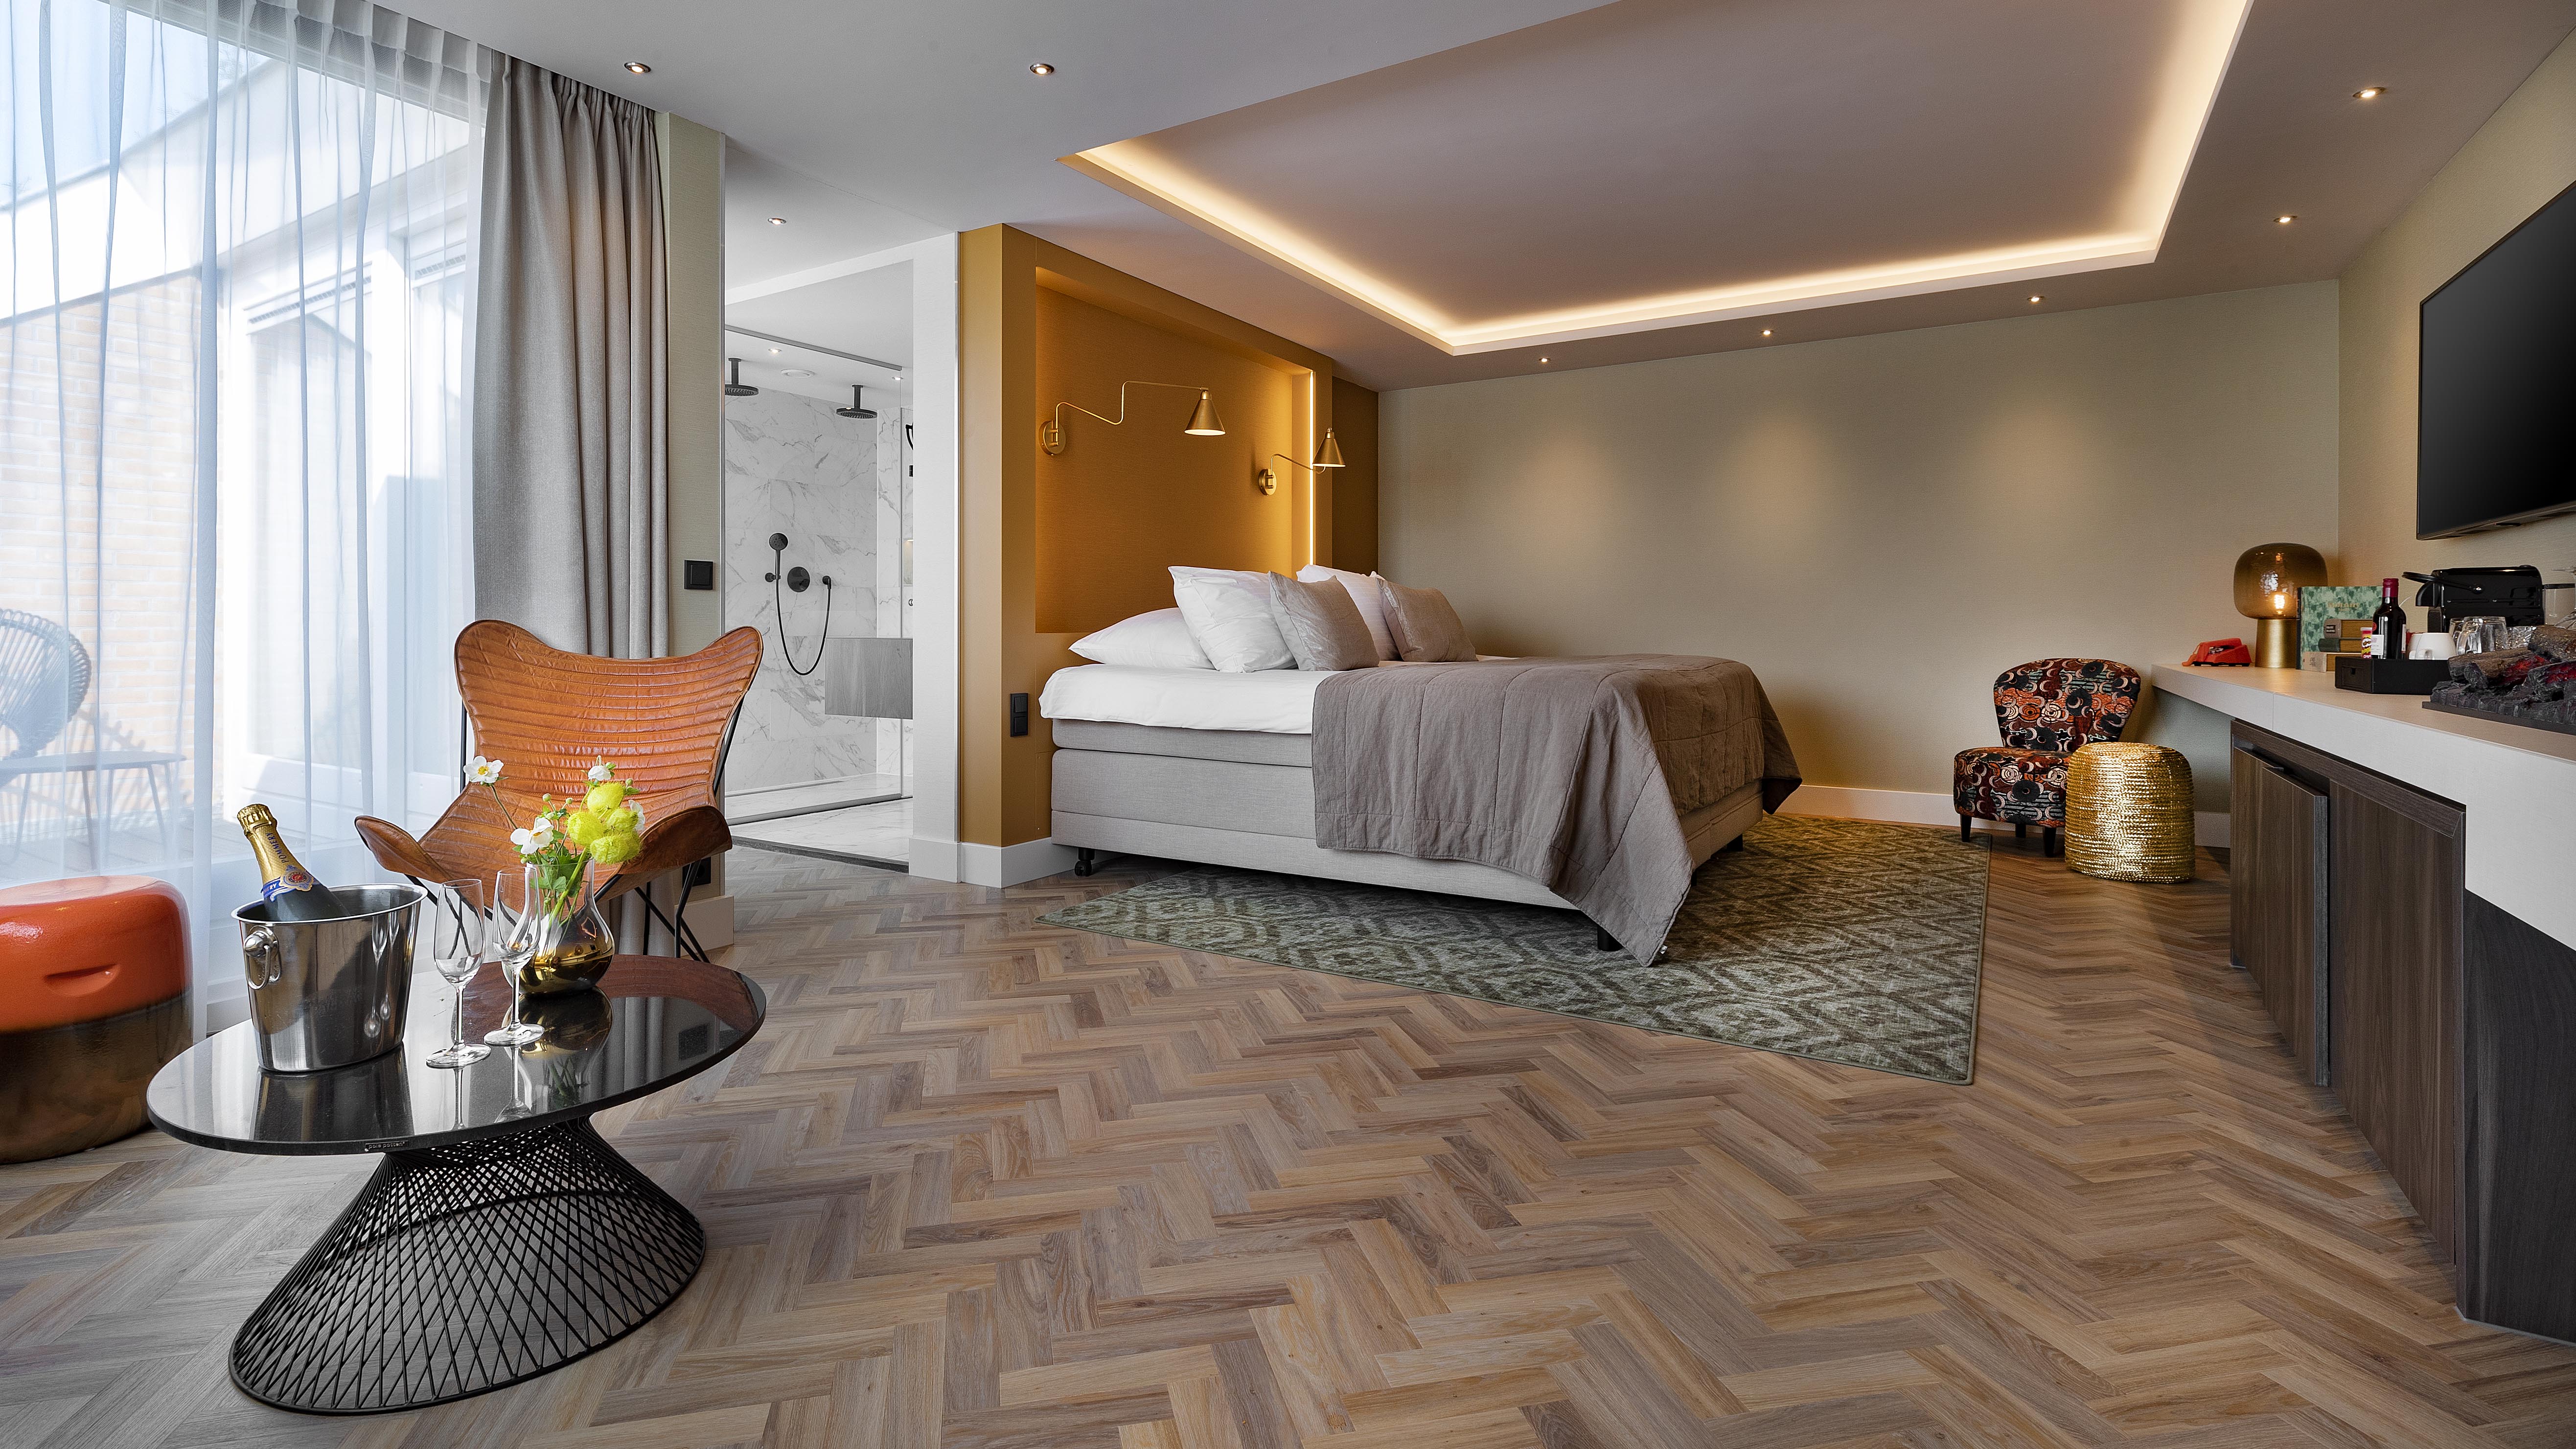 Hotel Emmeloord - Suite dream arrangement